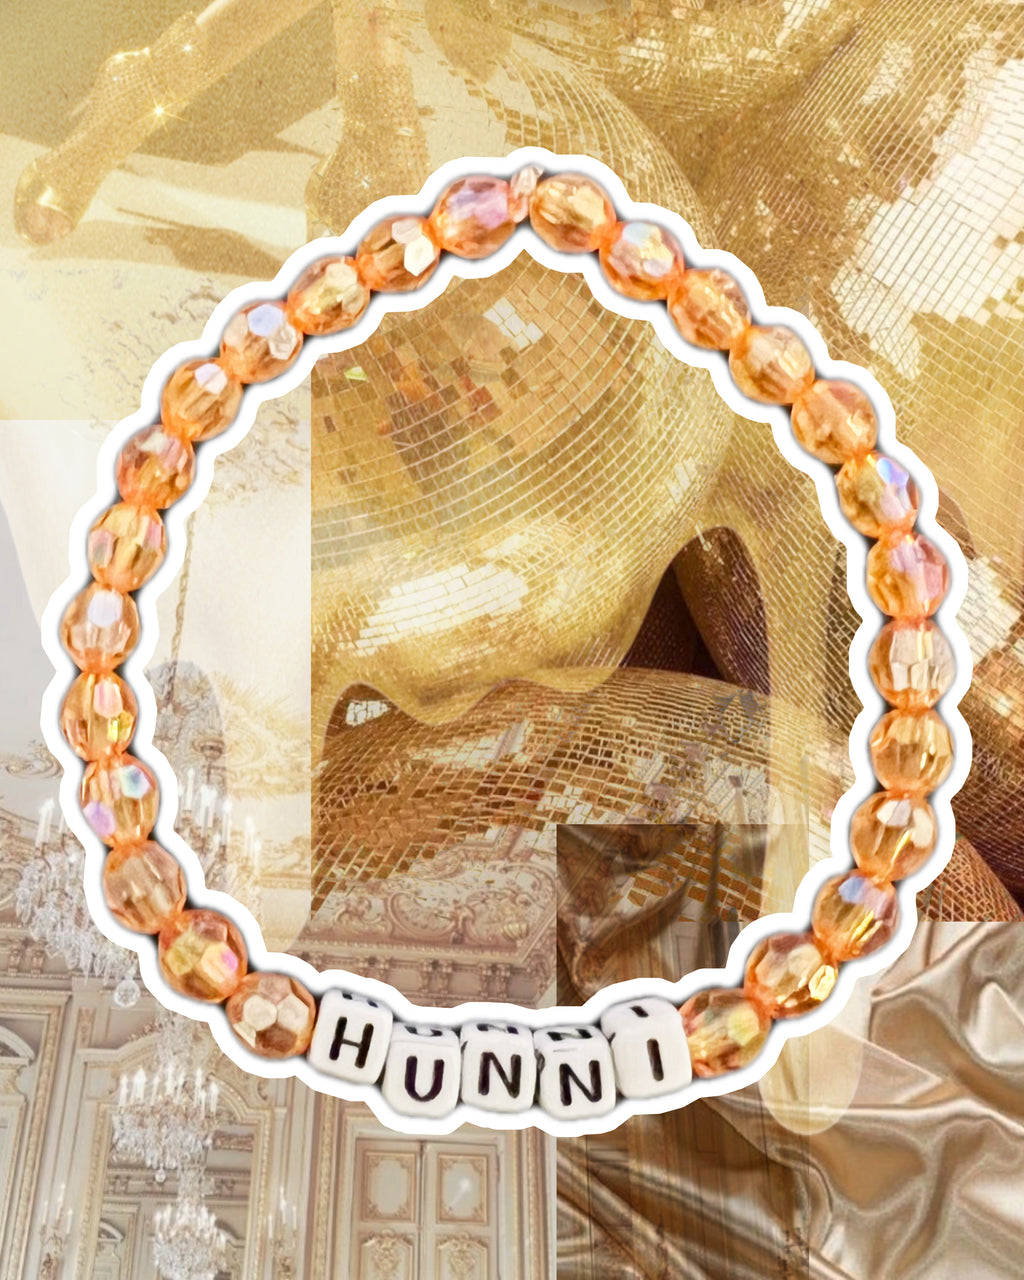 HUNNI - Delicious Hunnies